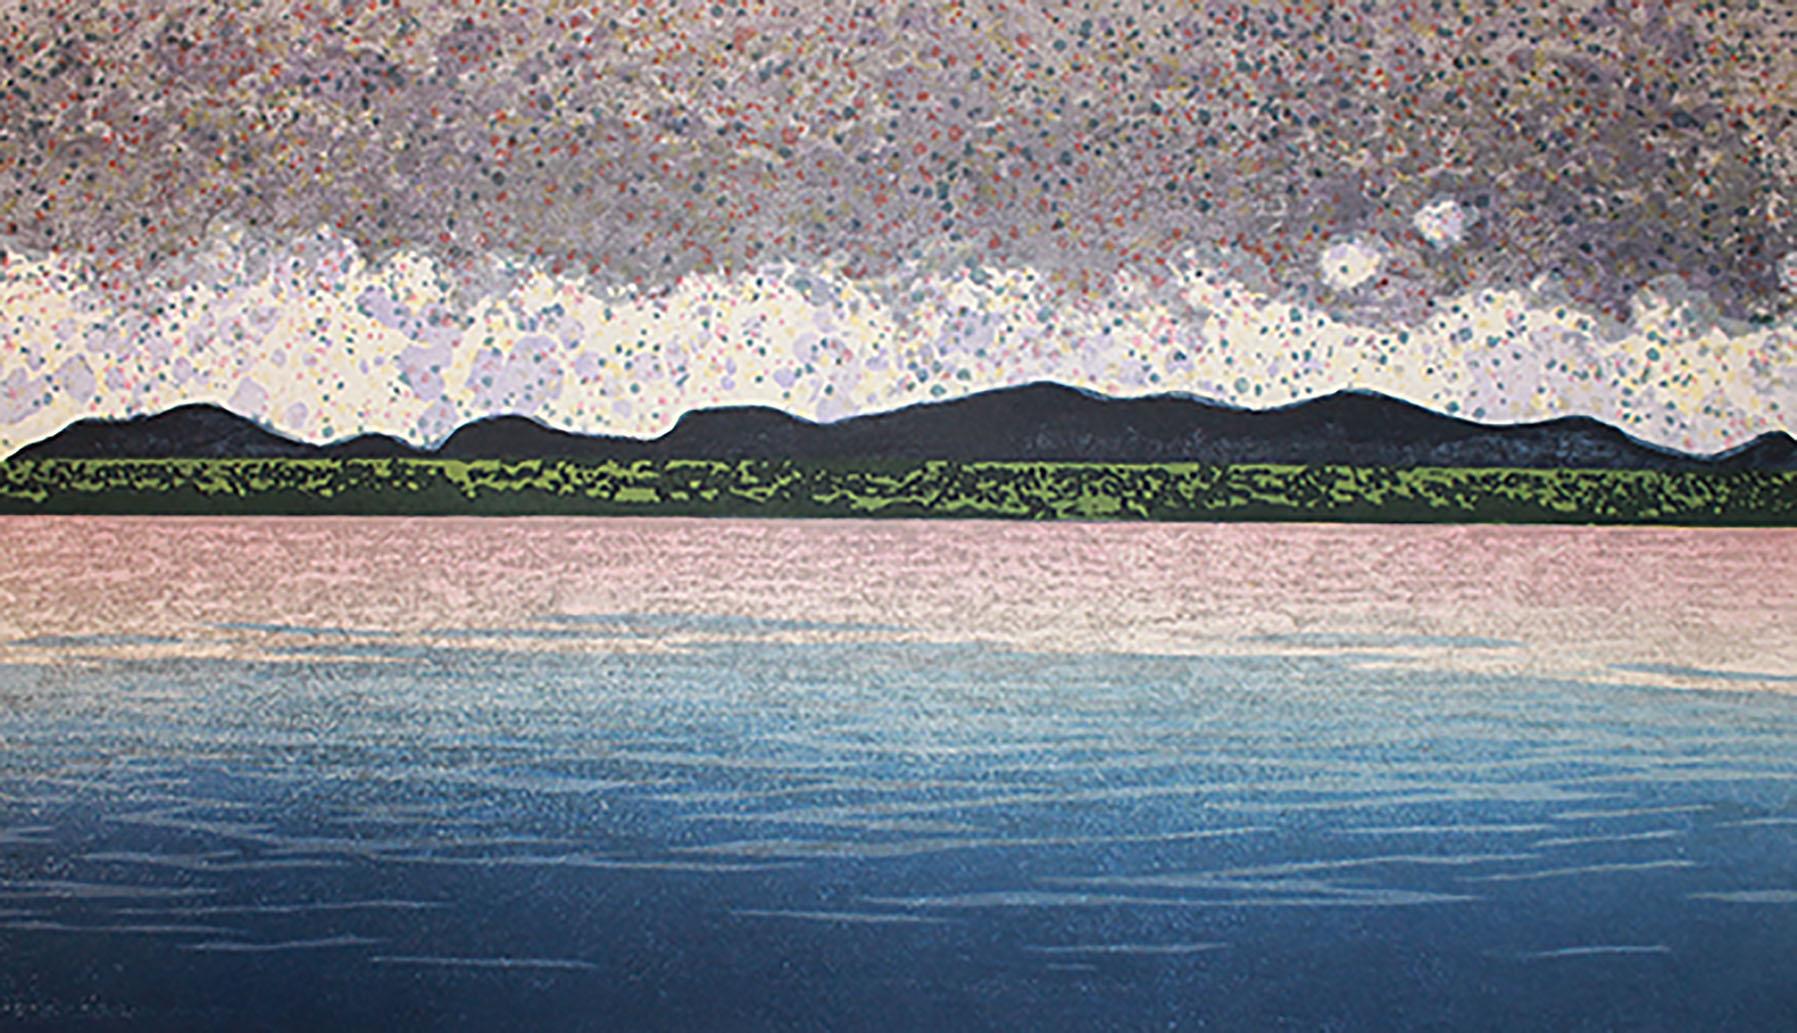 Allegro, Ukiyo-e landscape and sunset woodblock print, 2018